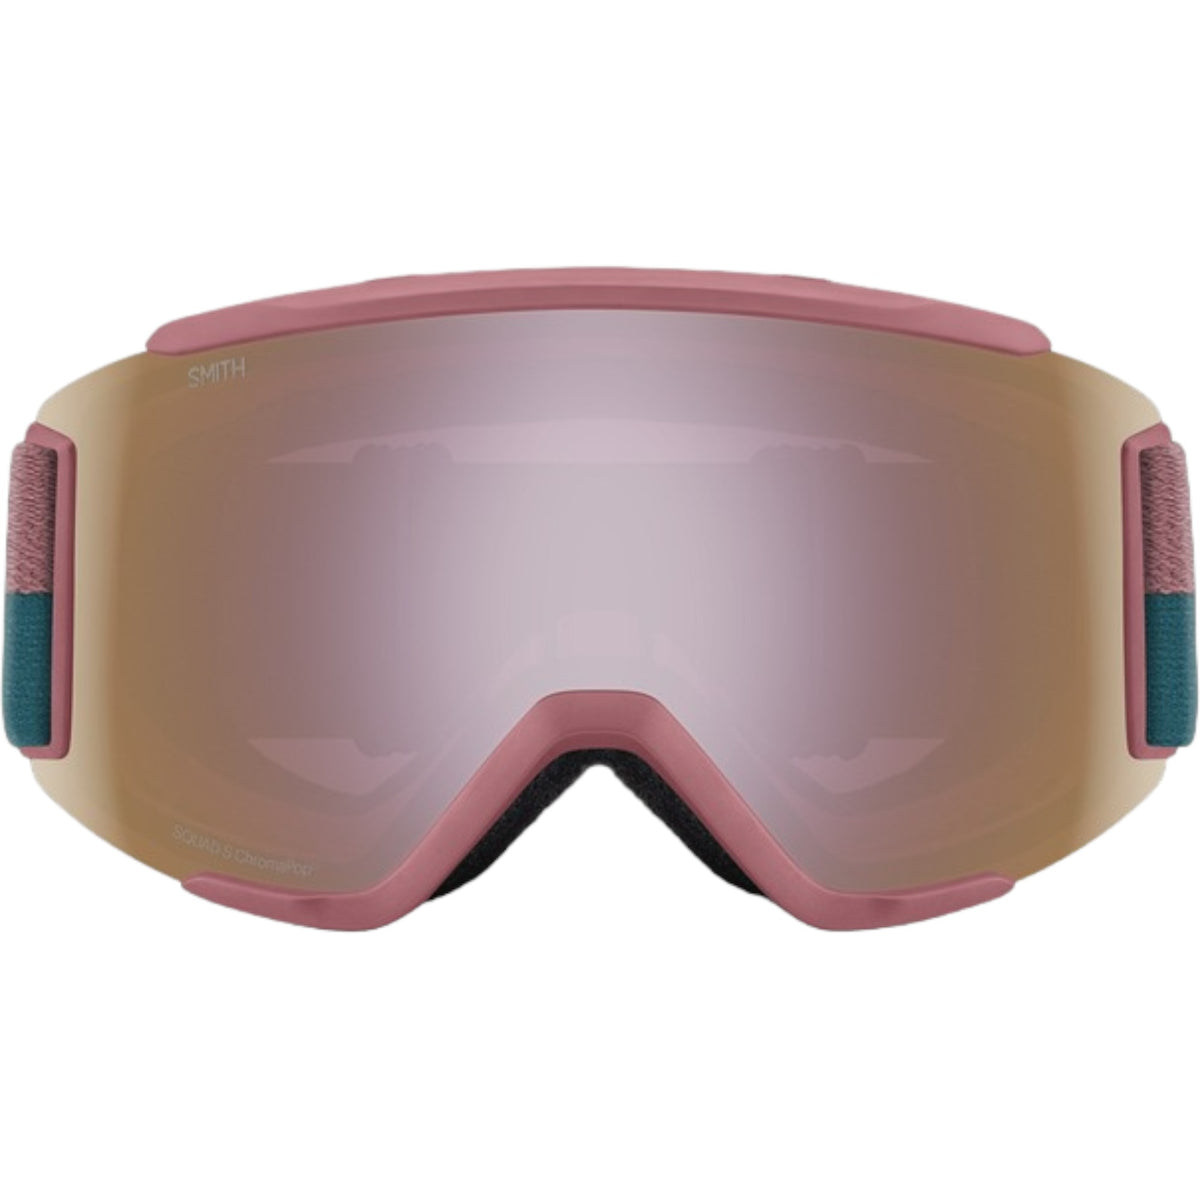 Adult Ski Goggles